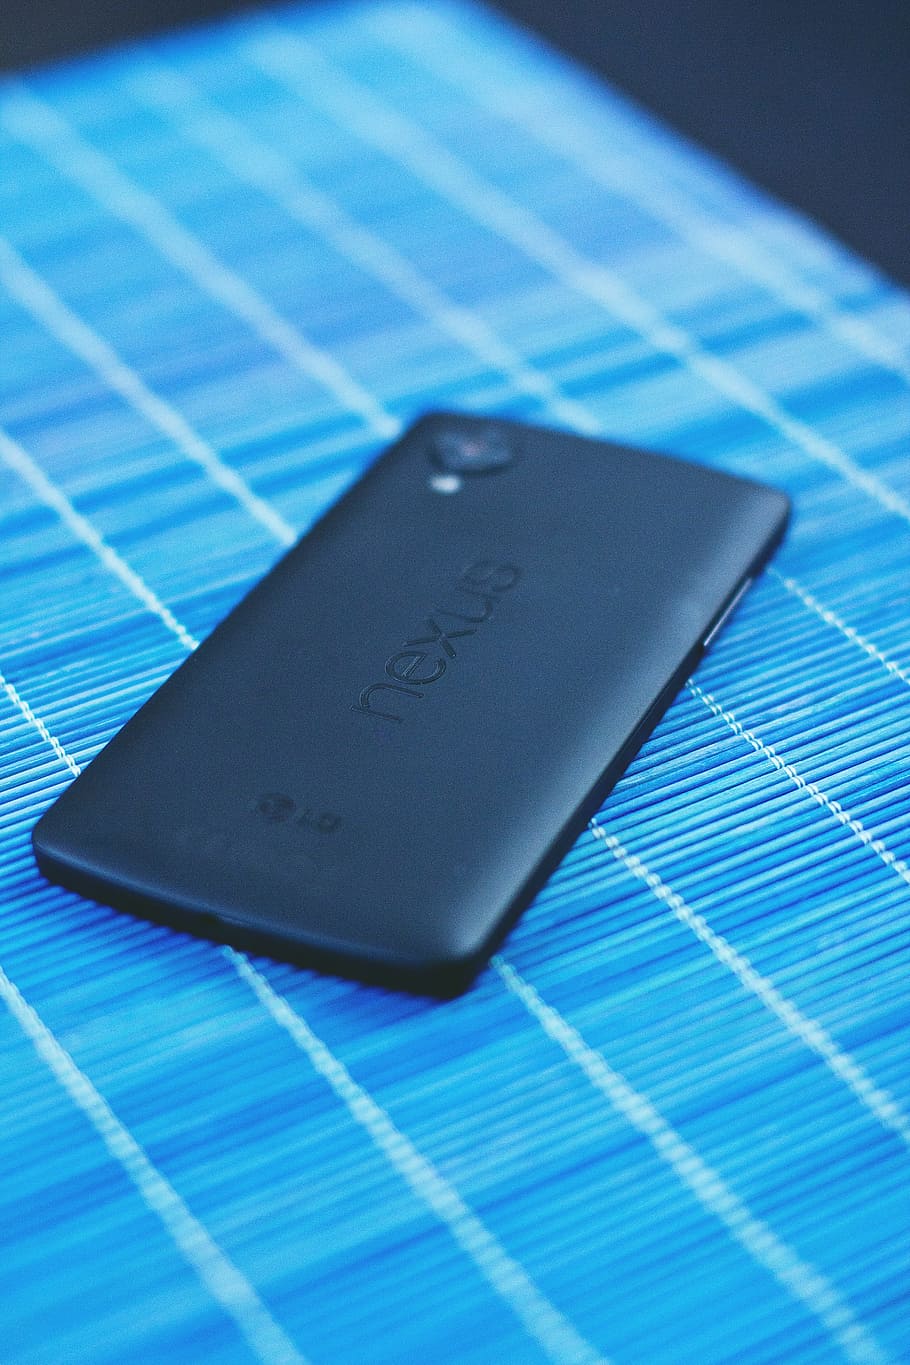 Nexus 5 1080p 2k 4k 5k Hd Wallpapers Free Download Wallpaper Flare